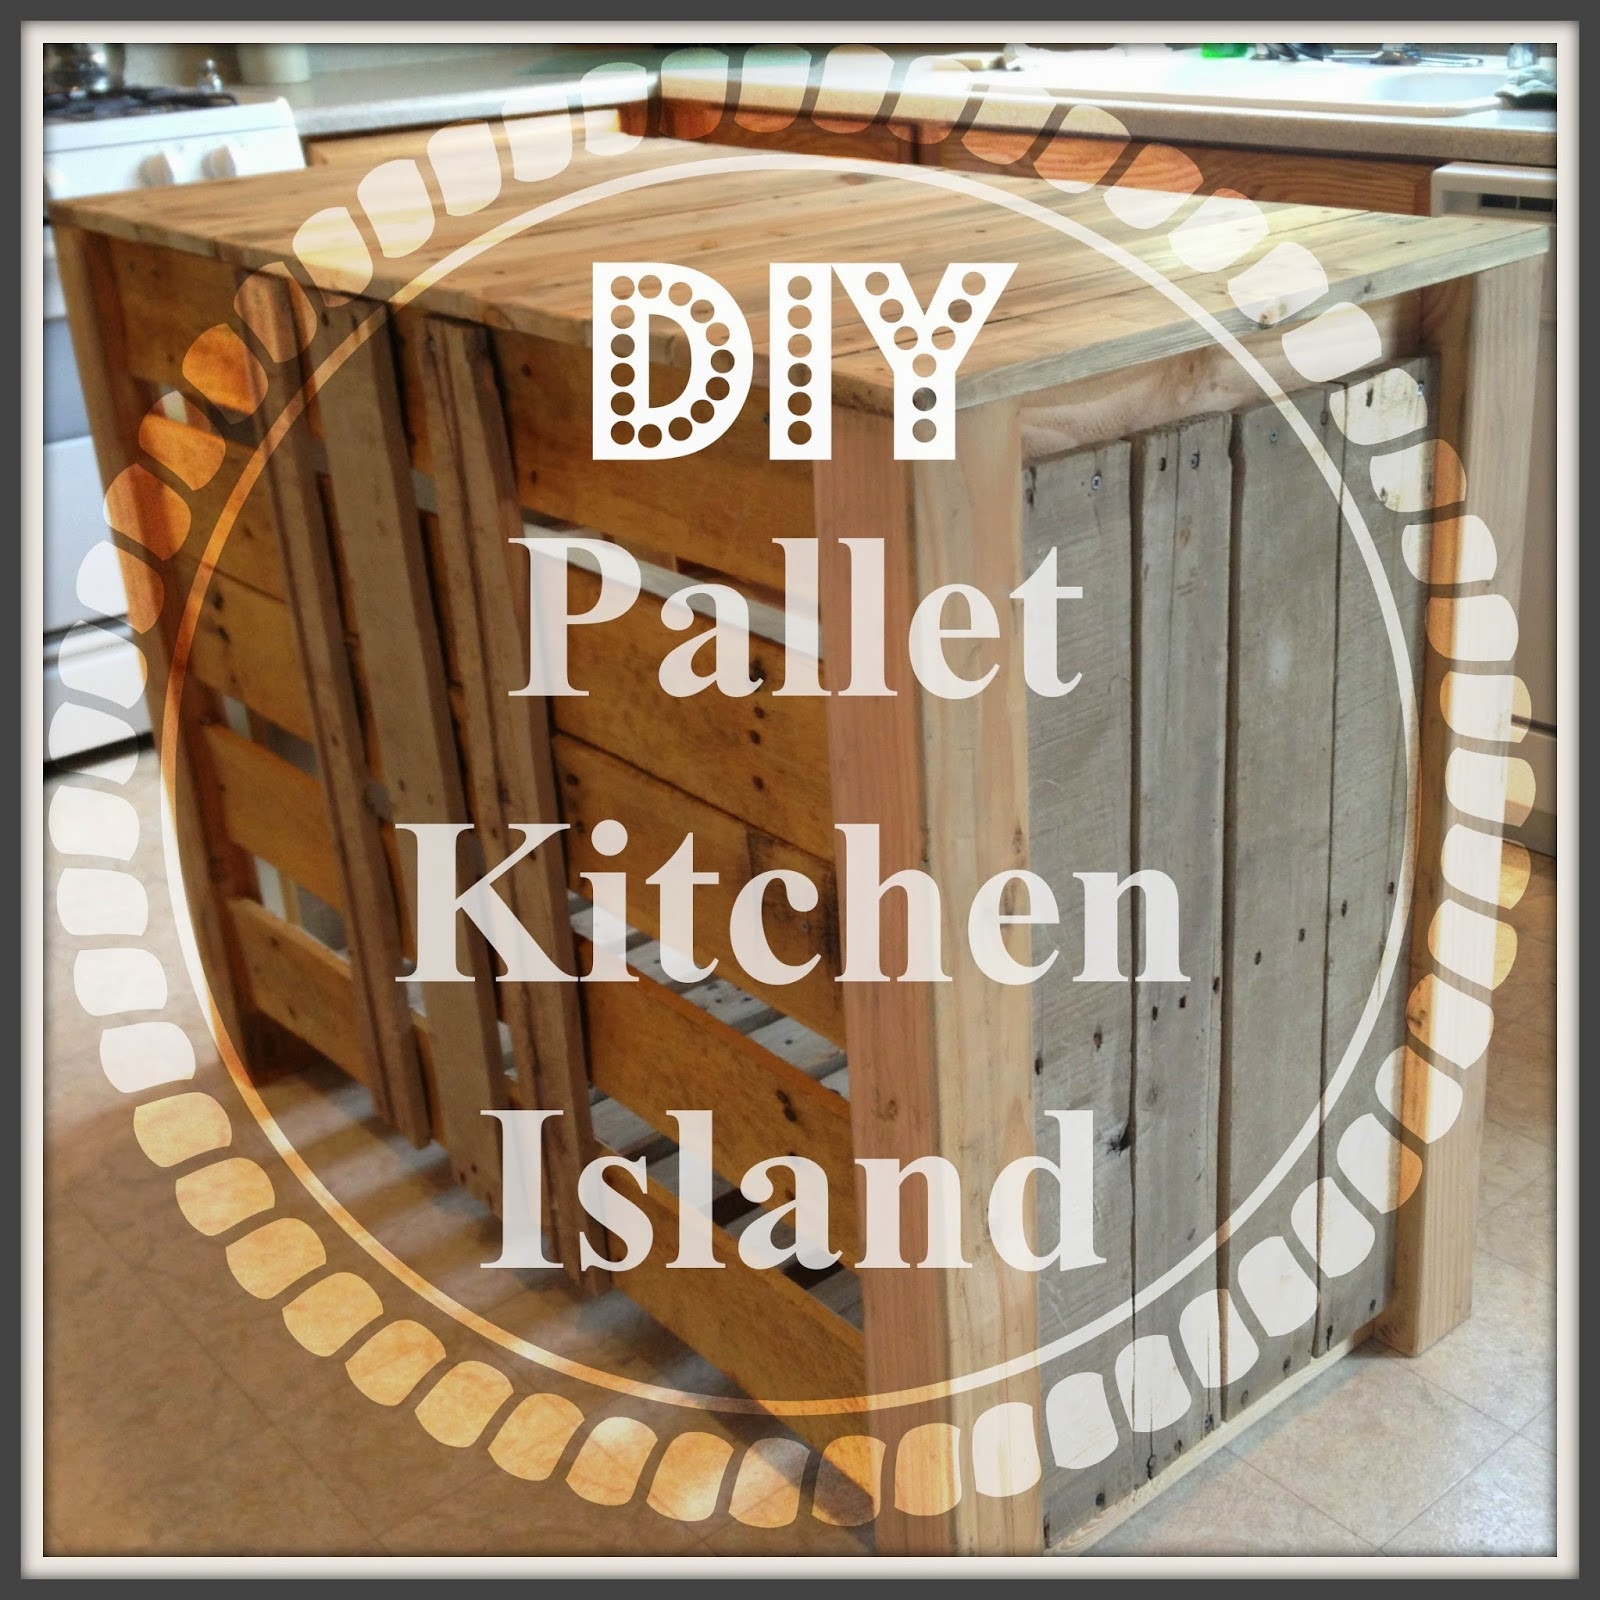 Best ideas about DIY Pallet Kitchen Island
. Save or Pin Noting Grace DIY Pallet Kitchen Island for less than $50 Now.